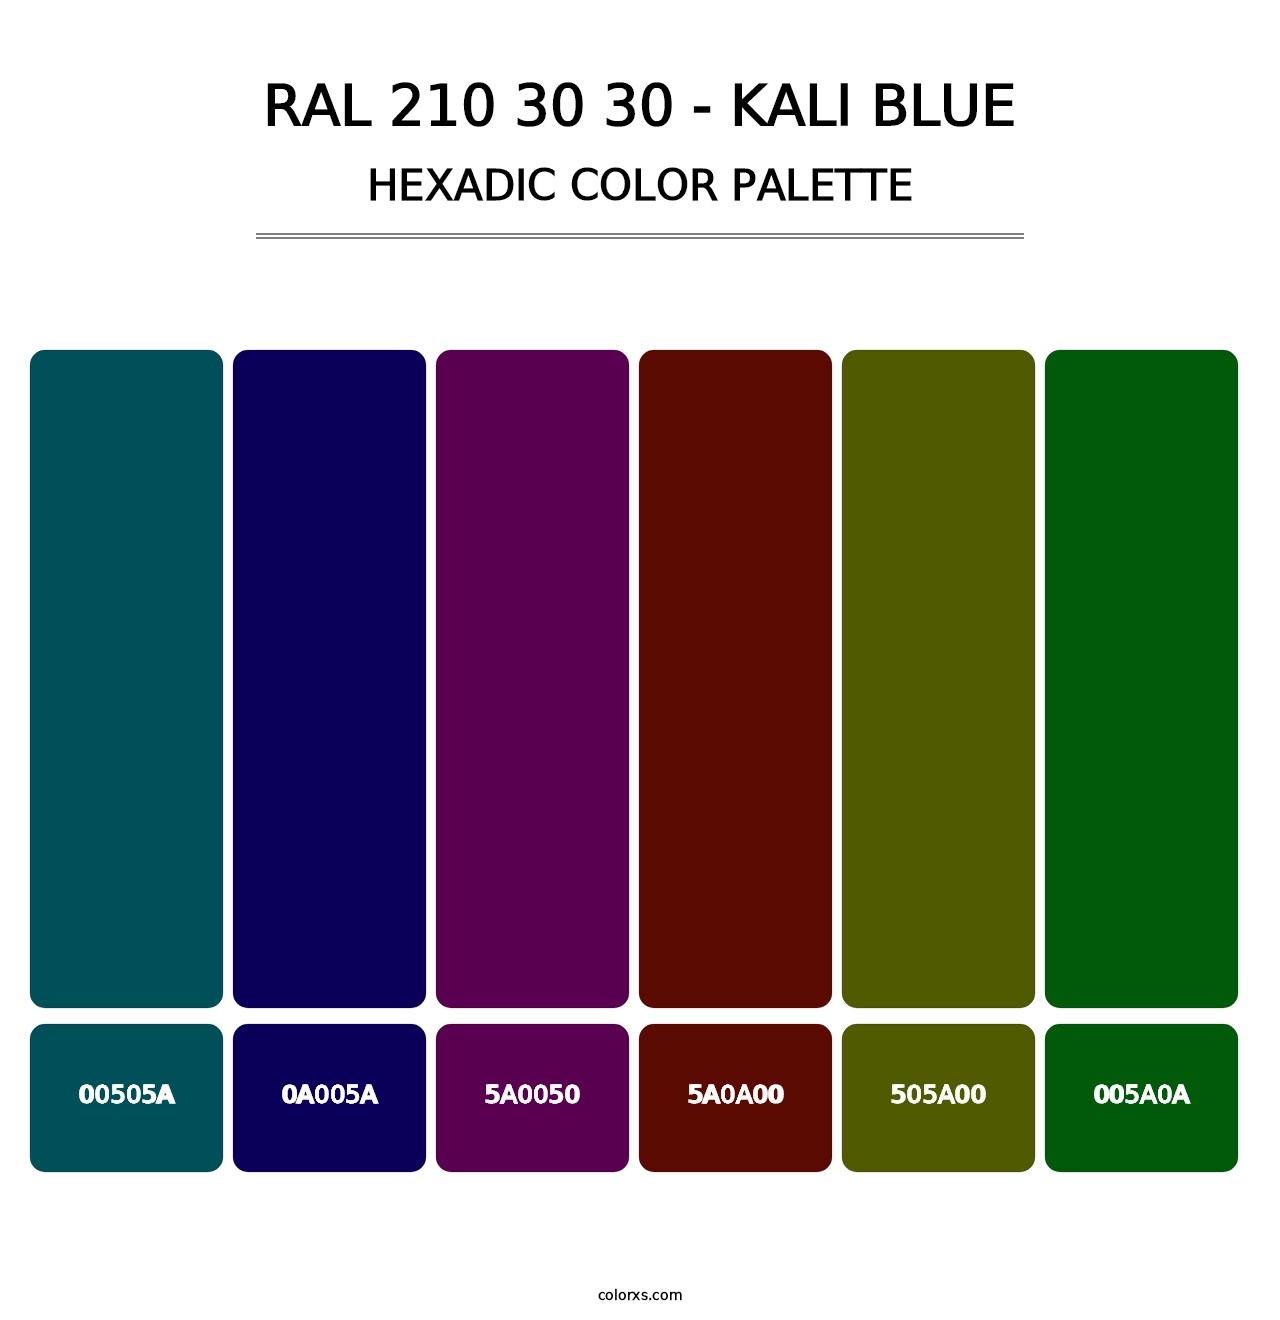 RAL 210 30 30 - Kali Blue - Hexadic Color Palette